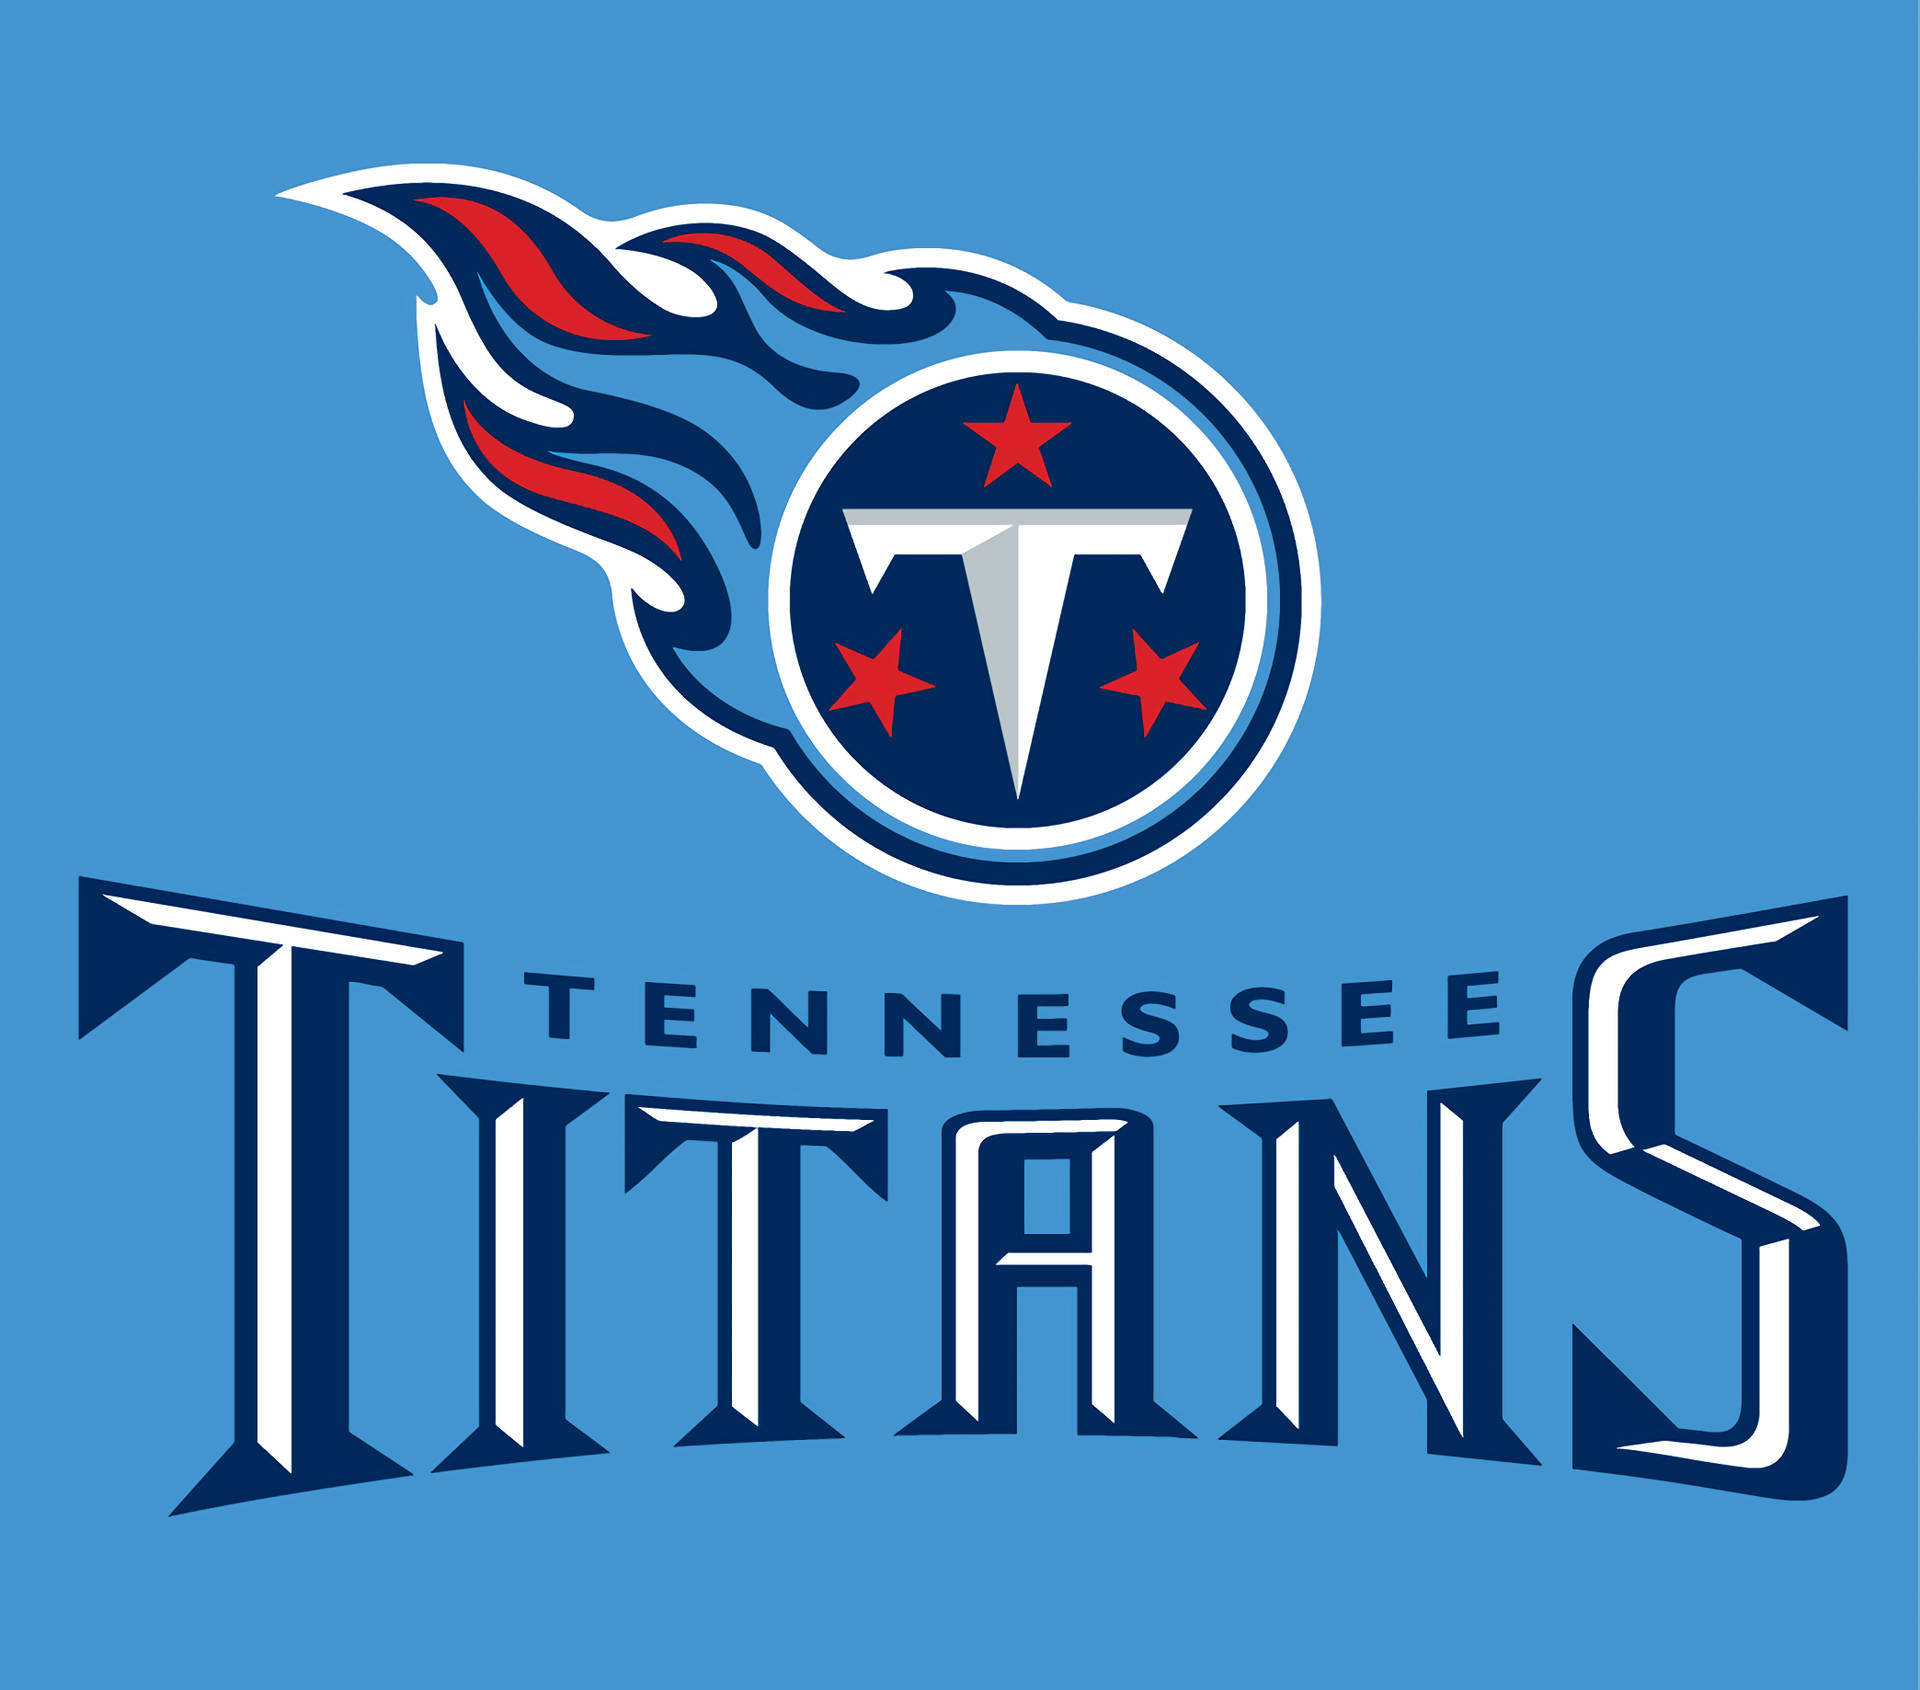 Tennessee Titans Emblem Background